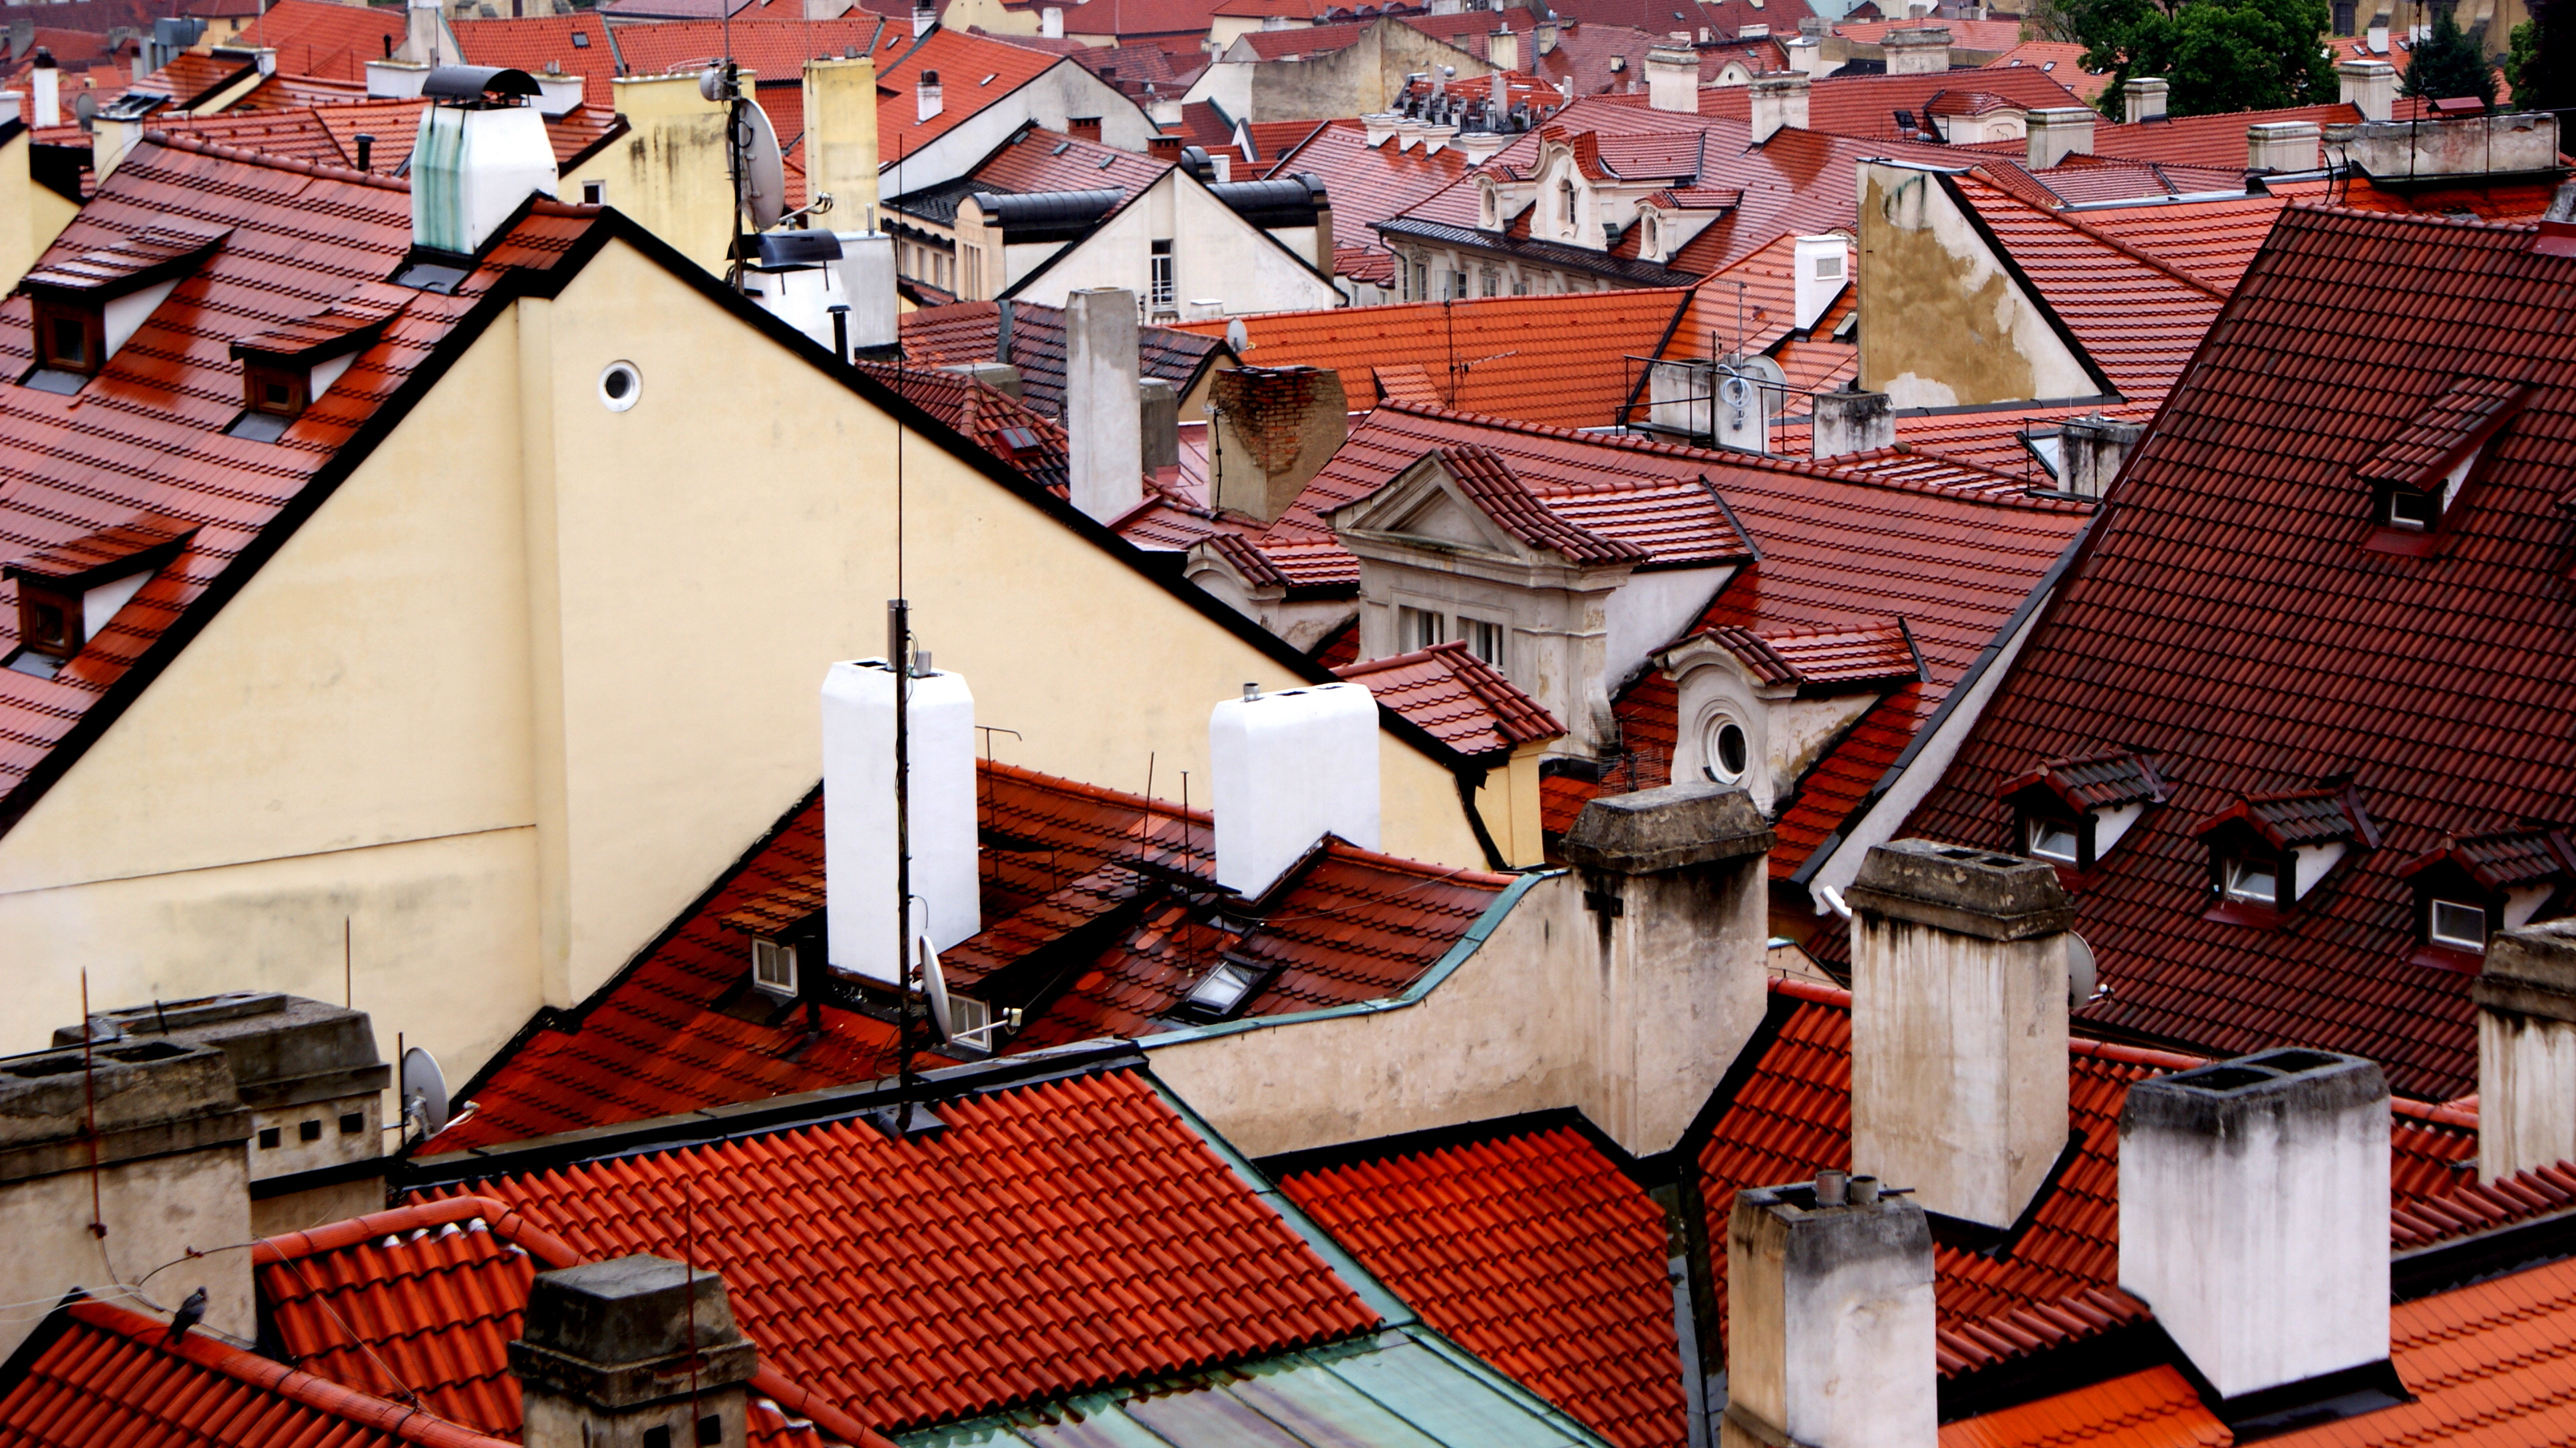 Prague roofs photo